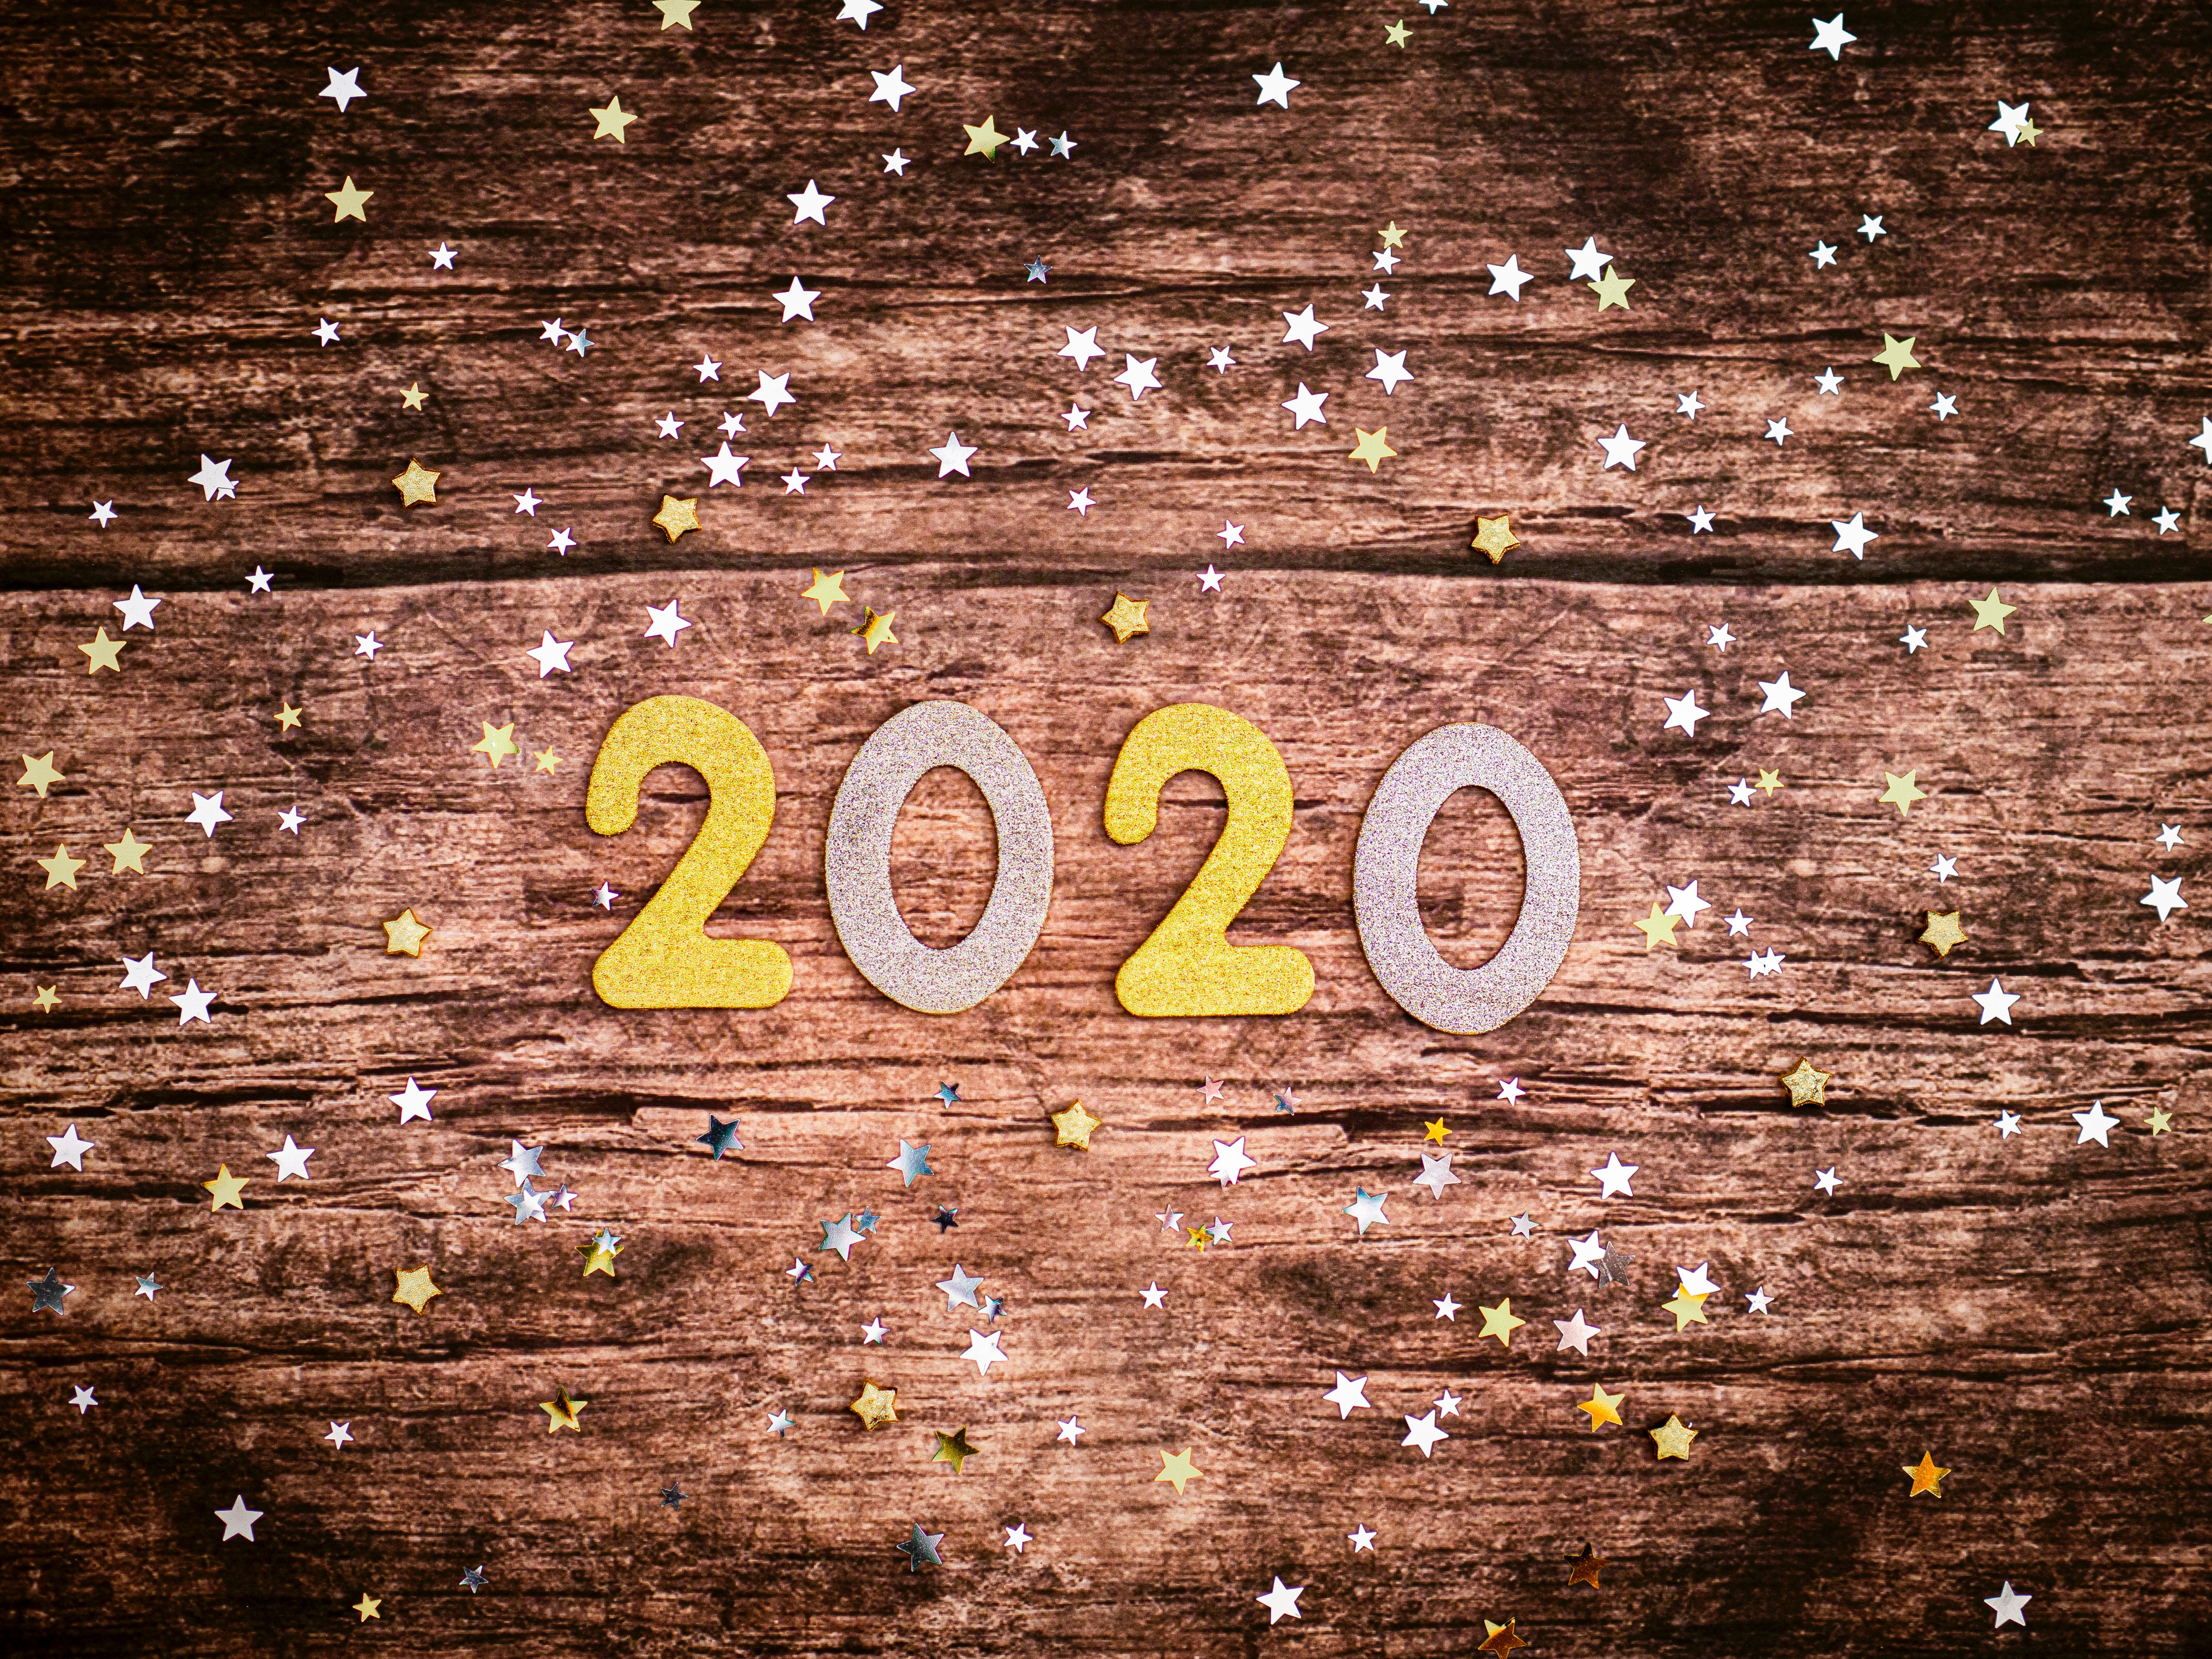 2020 Overlaid on a Wood Board